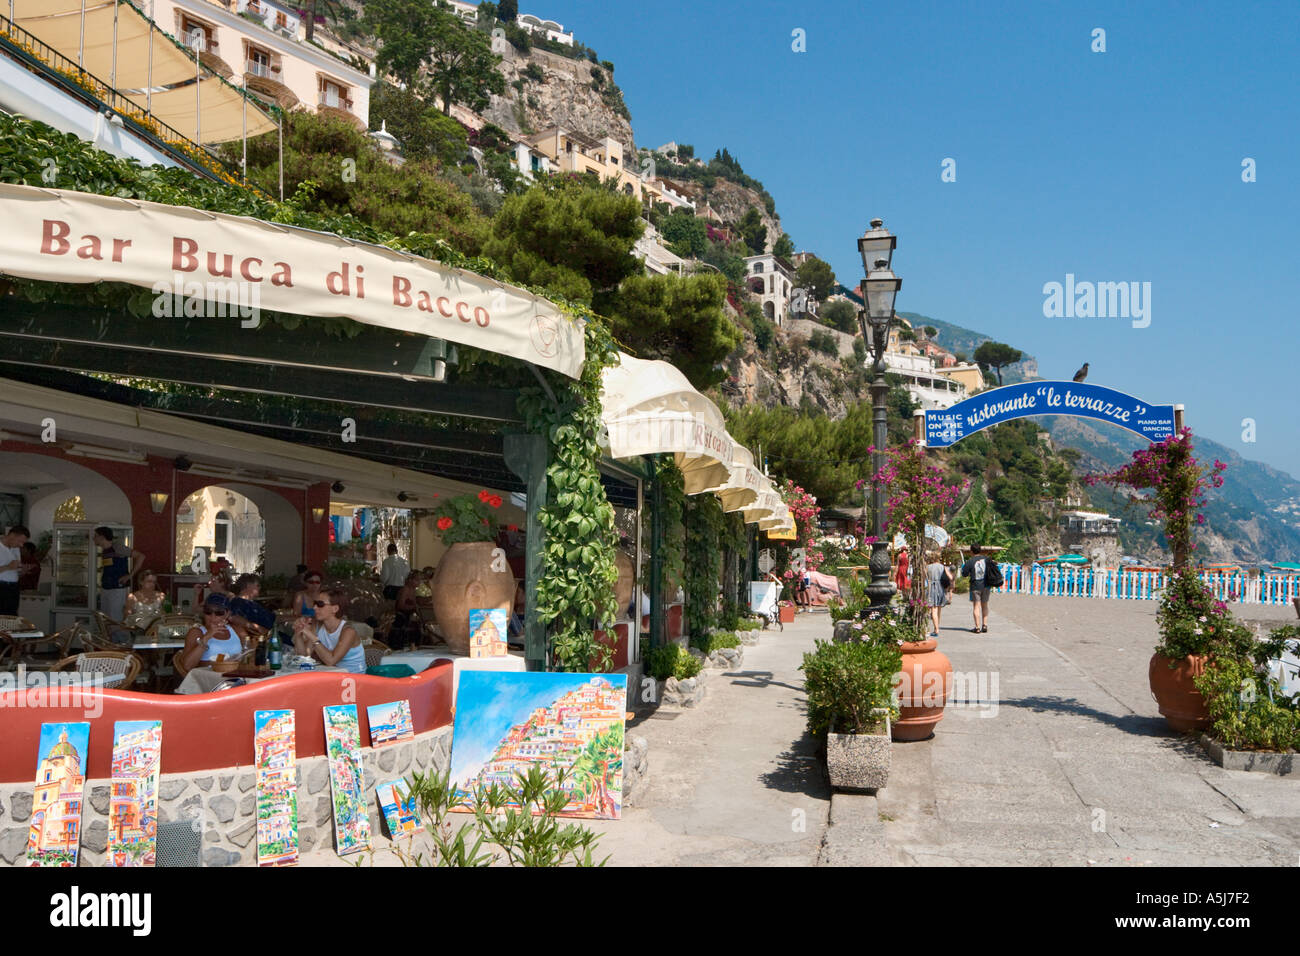 El restaurante frente a la playa, Positano, Amalfi Costa (Costiera Amalfitana), Riviera Napolitana, Italia Foto de stock